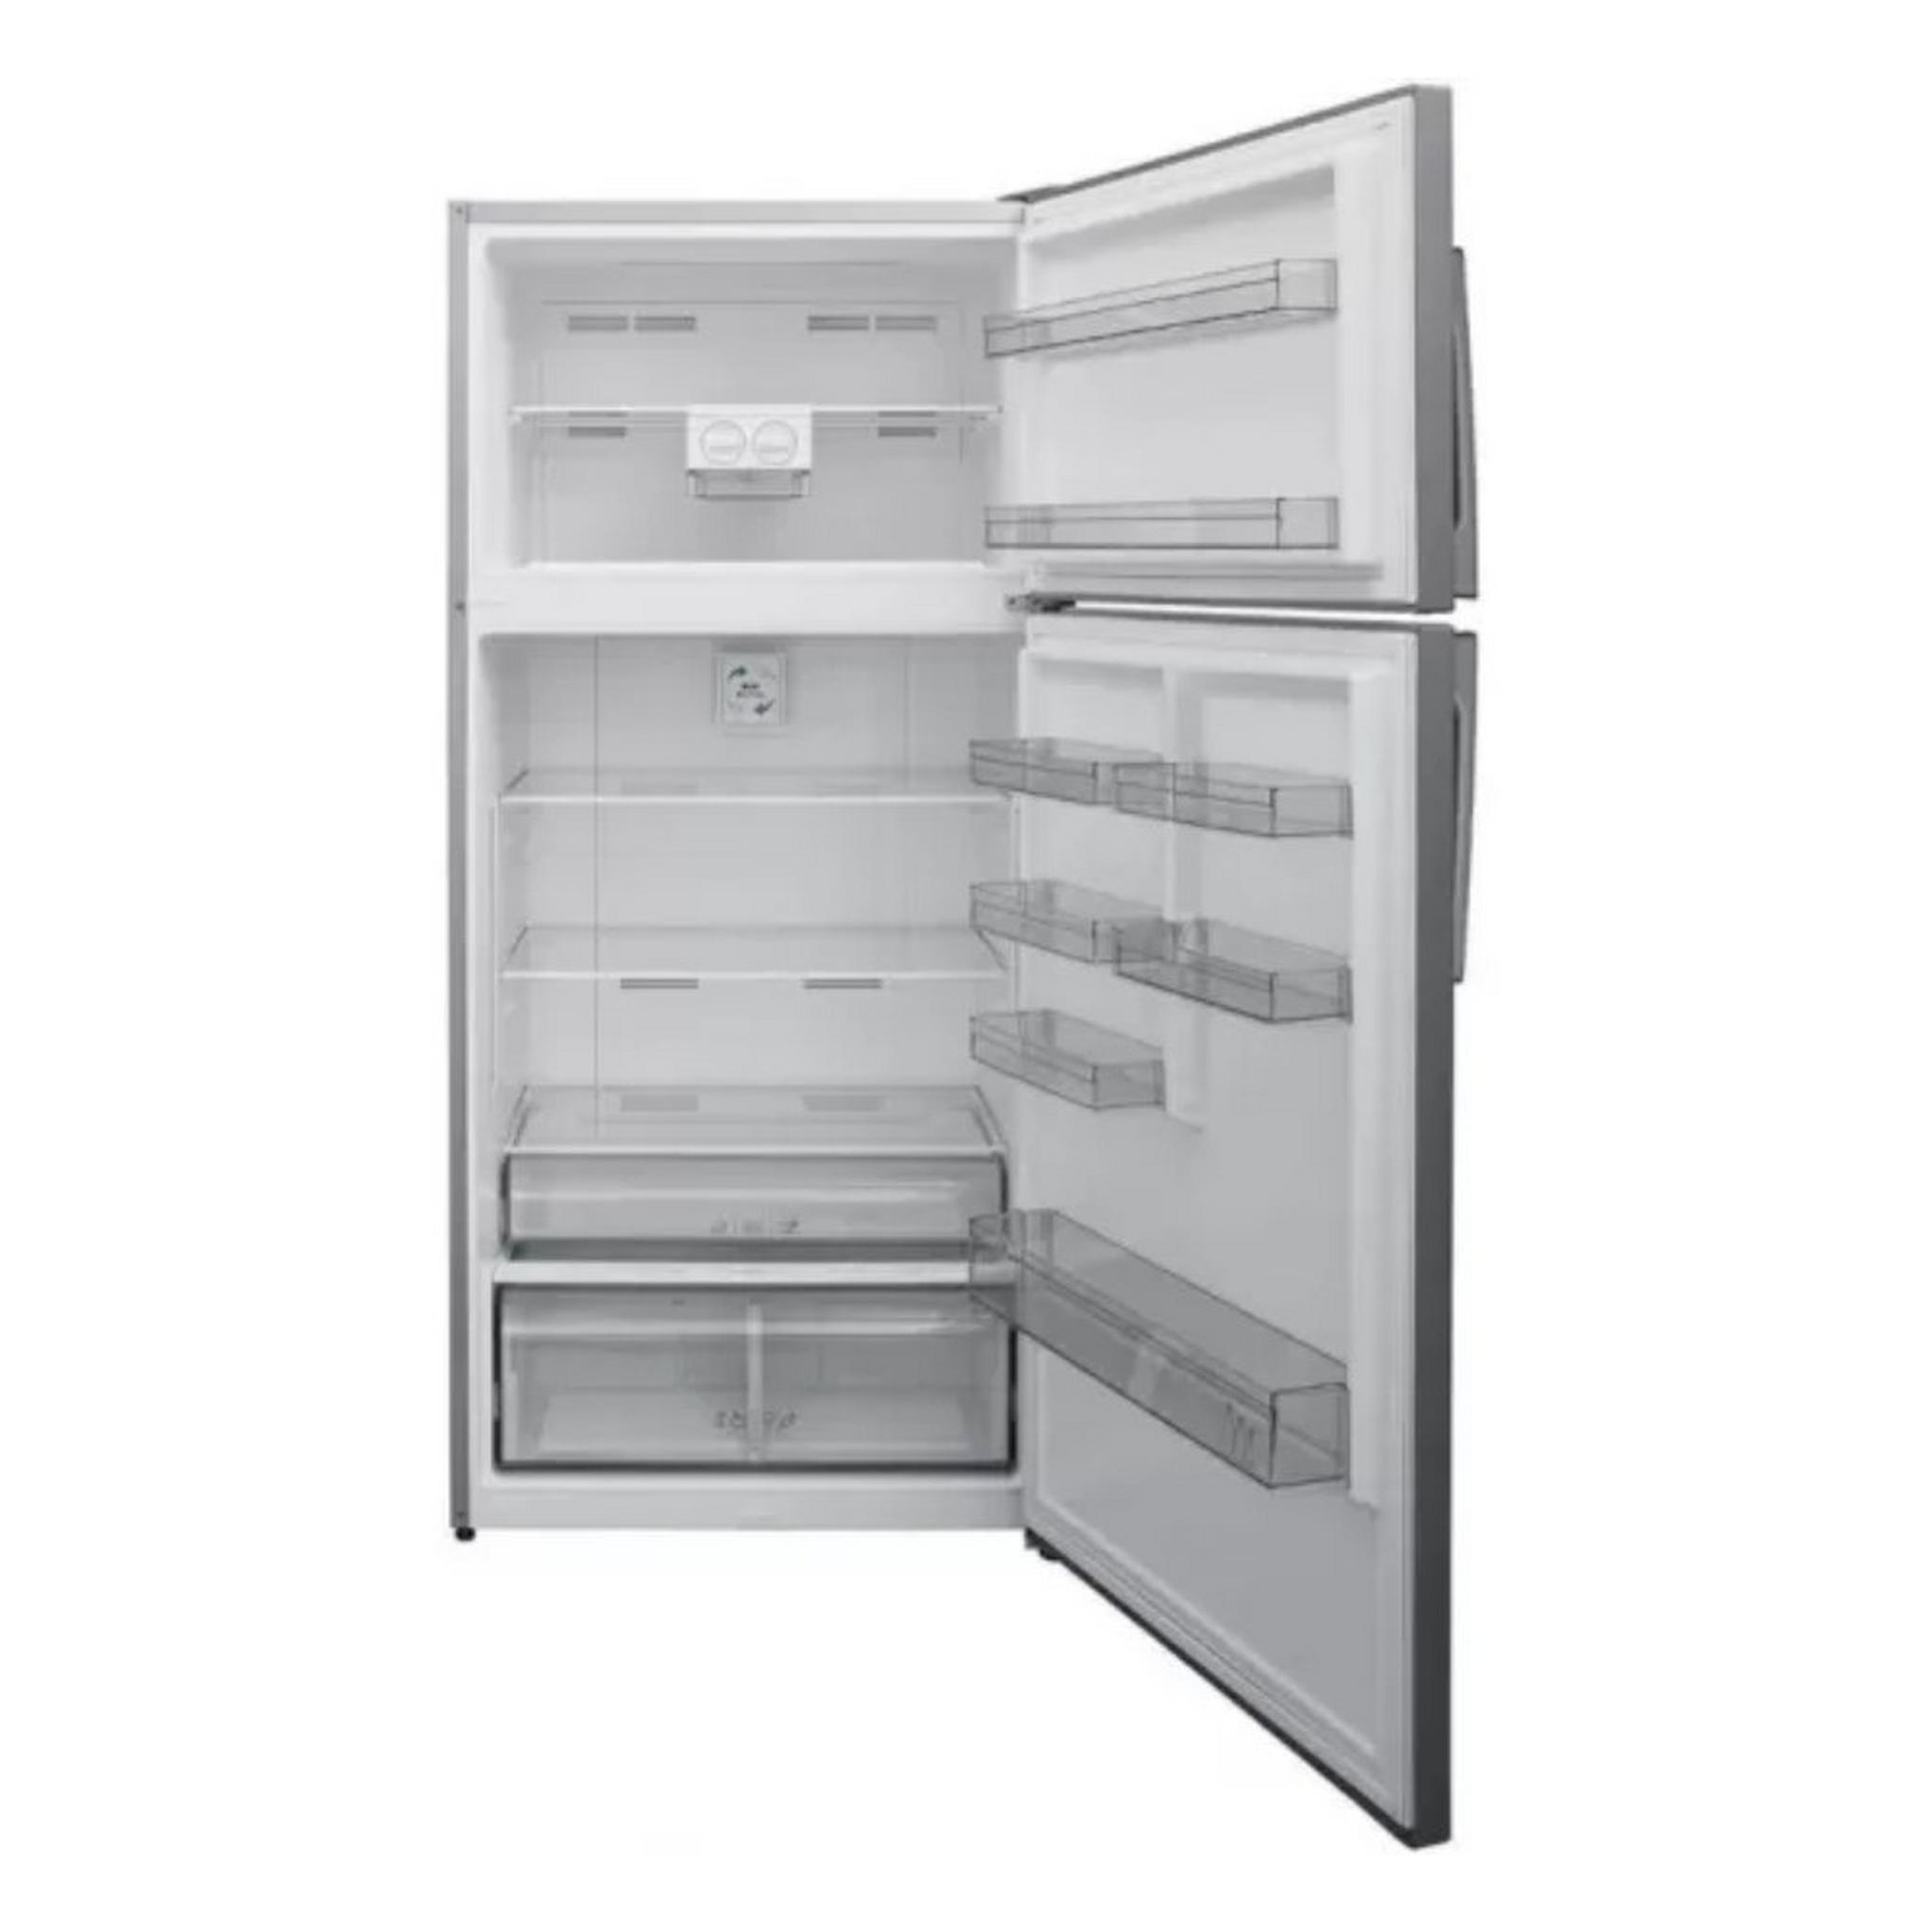 Panasonic  Top Mount Refrigerator, 26.5CFT, 752-Liters, NR-BC752VSAS - Silver